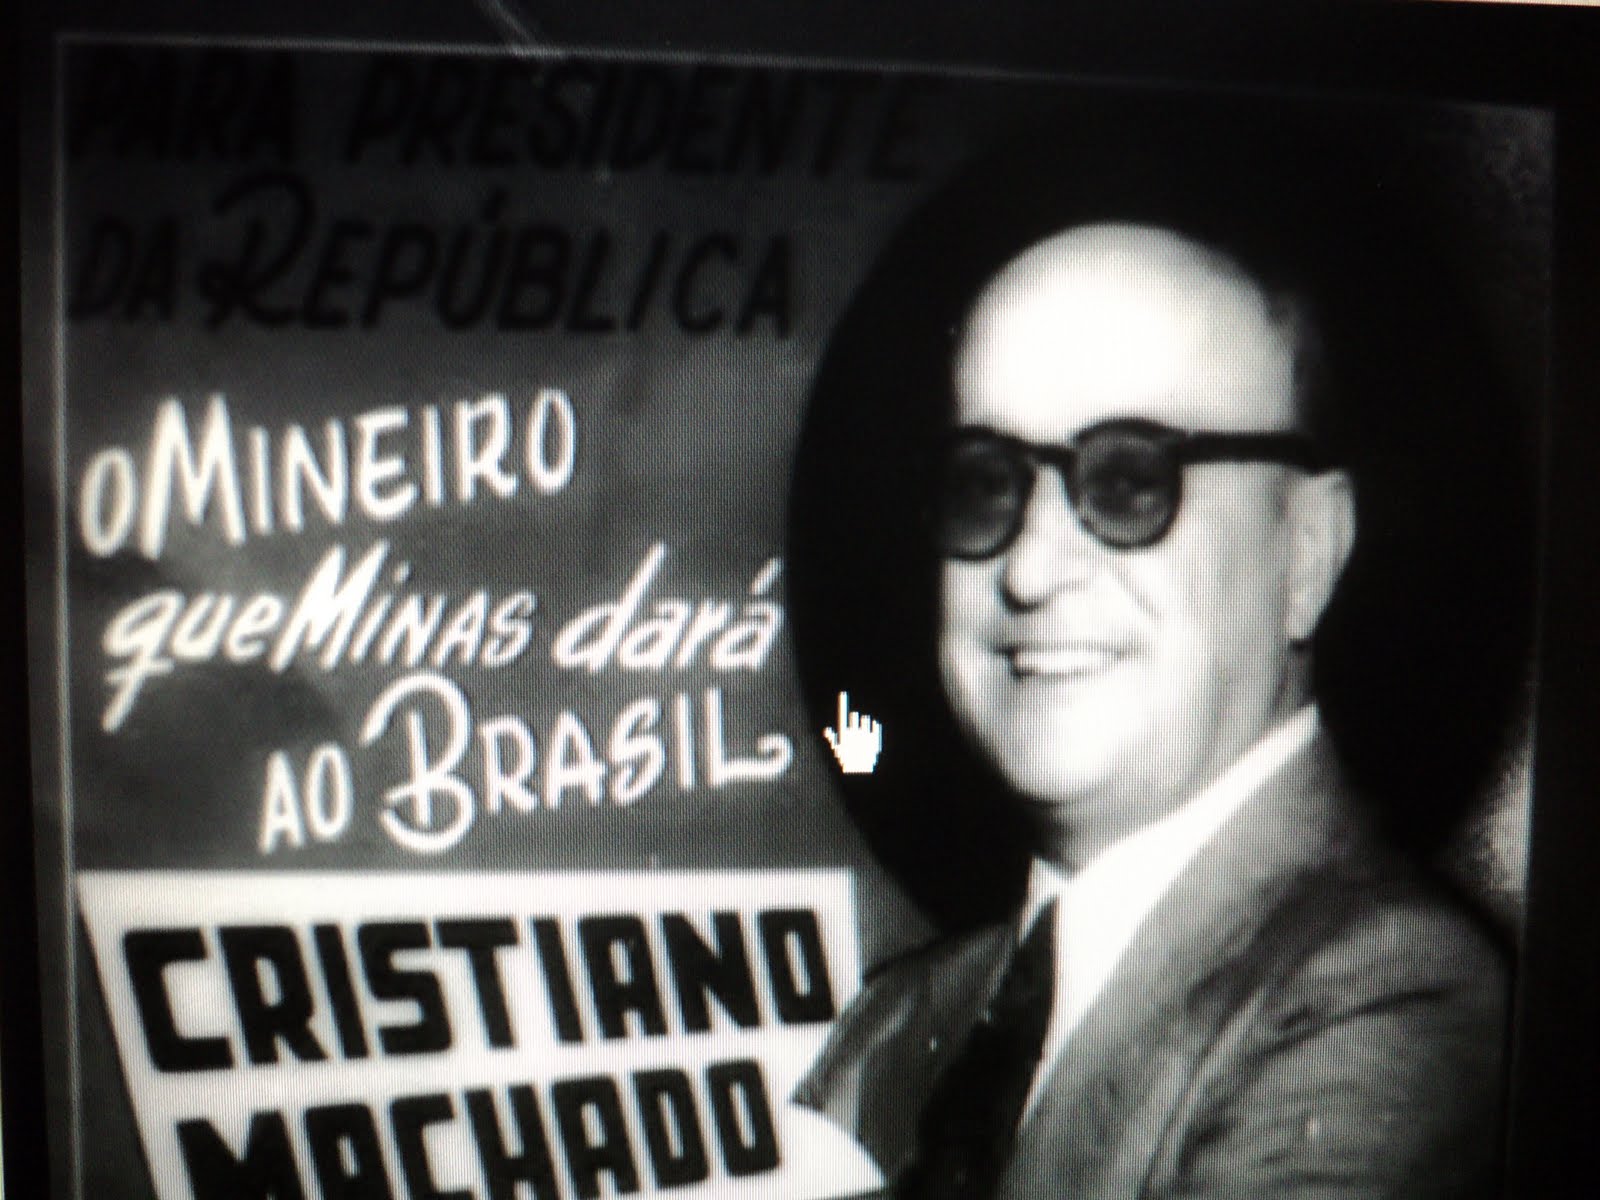 O candidato do PSD, Cristiano Machado, acabou sendo relegado por seu próprio partido que se aliou ao PTB de Getúlio Vargas. - fOTO%2BDE%2BcRISTIANO%2BmACHADO%25252CCAMPANHA